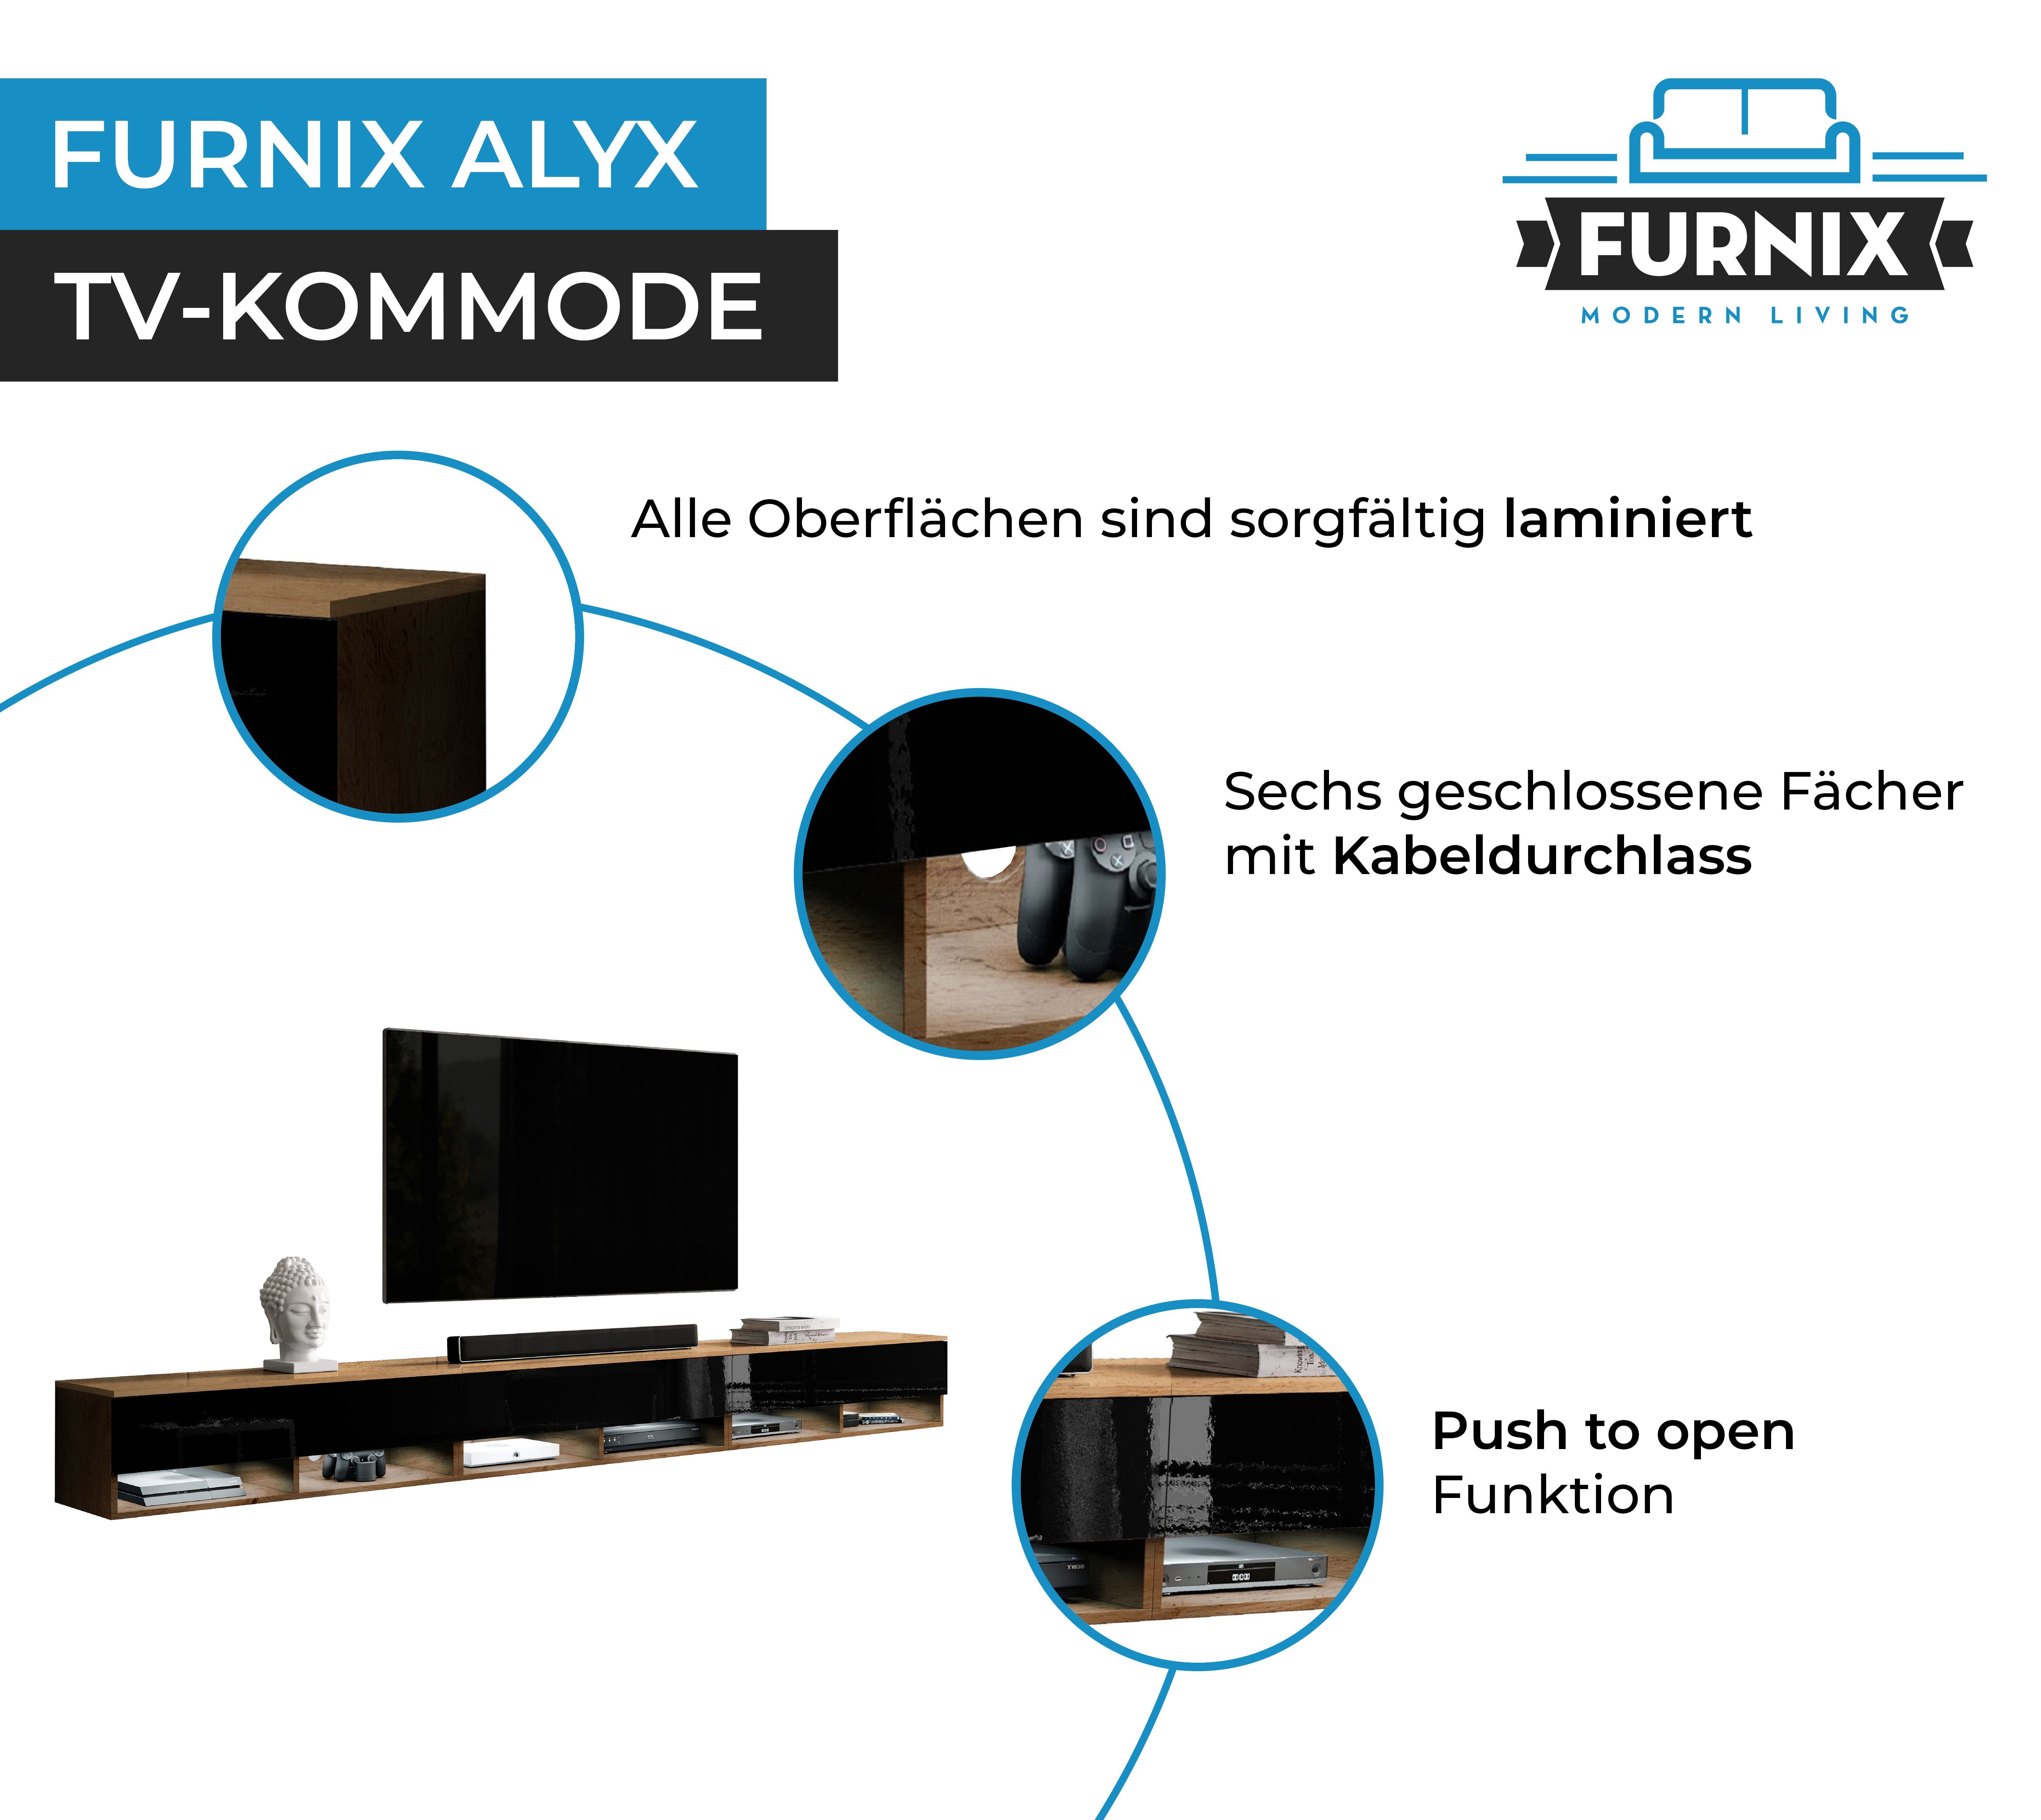 Wotan/Schwarz Furnix TV-Kommode LED ohne Türen cm H34 x Lowboard 3 mit 300 Glanz x B300 ALYX TV-Schrank cm T32